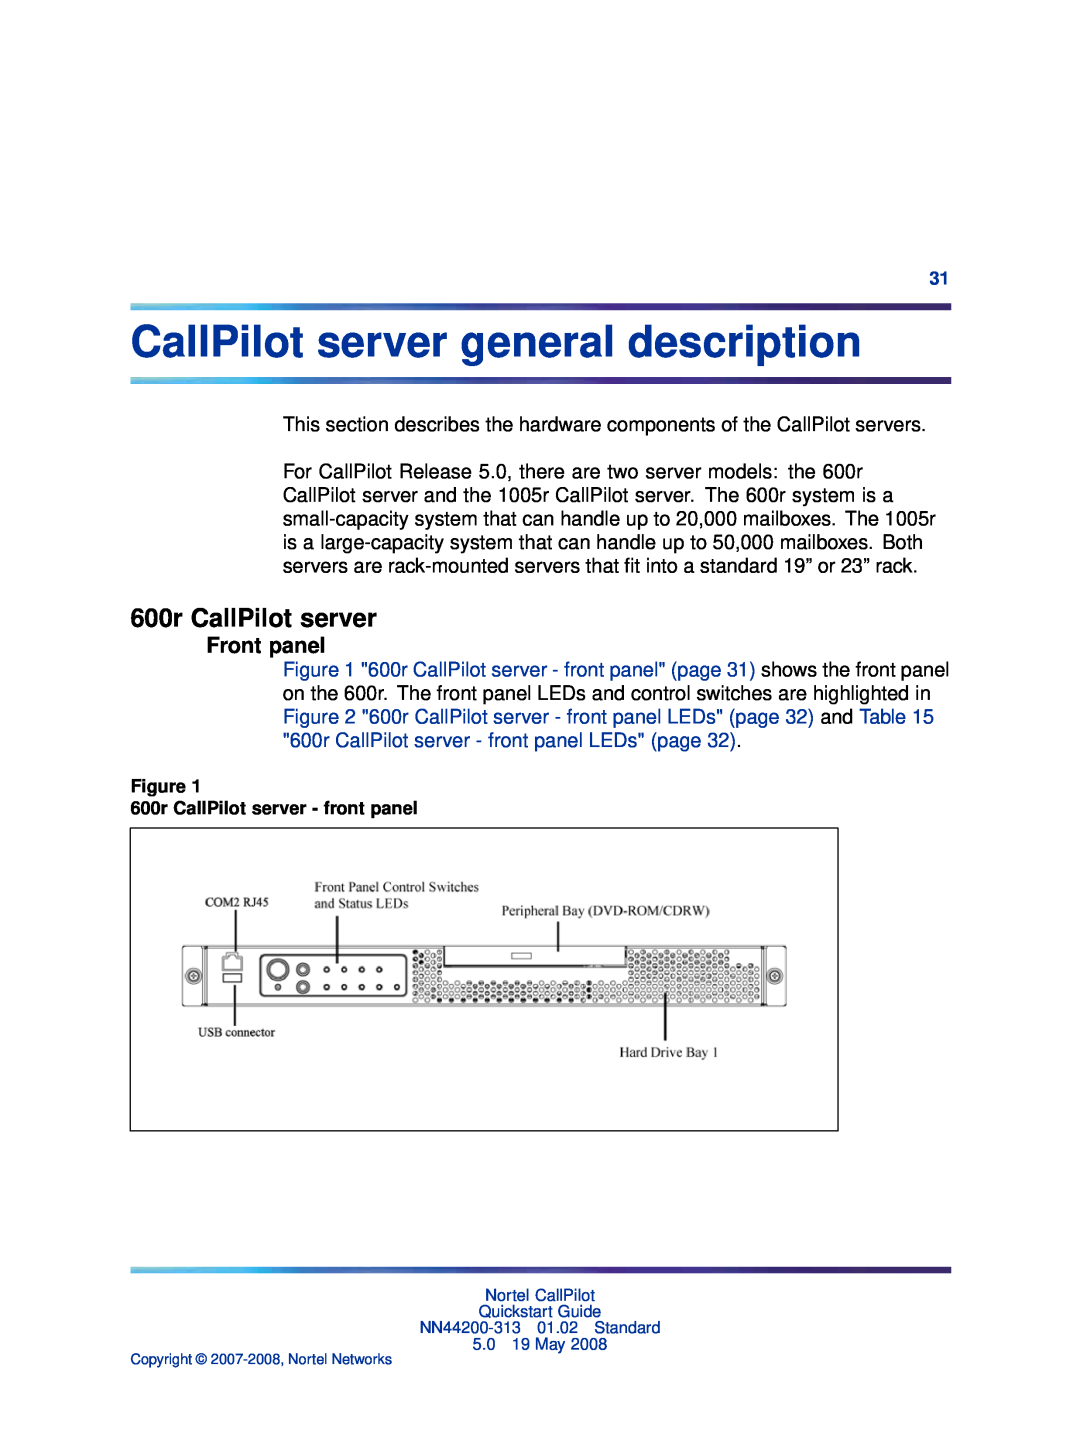 Nortel Networks NN44200-313 quick start CallPilot server general description, 600r CallPilot server, Front panel 